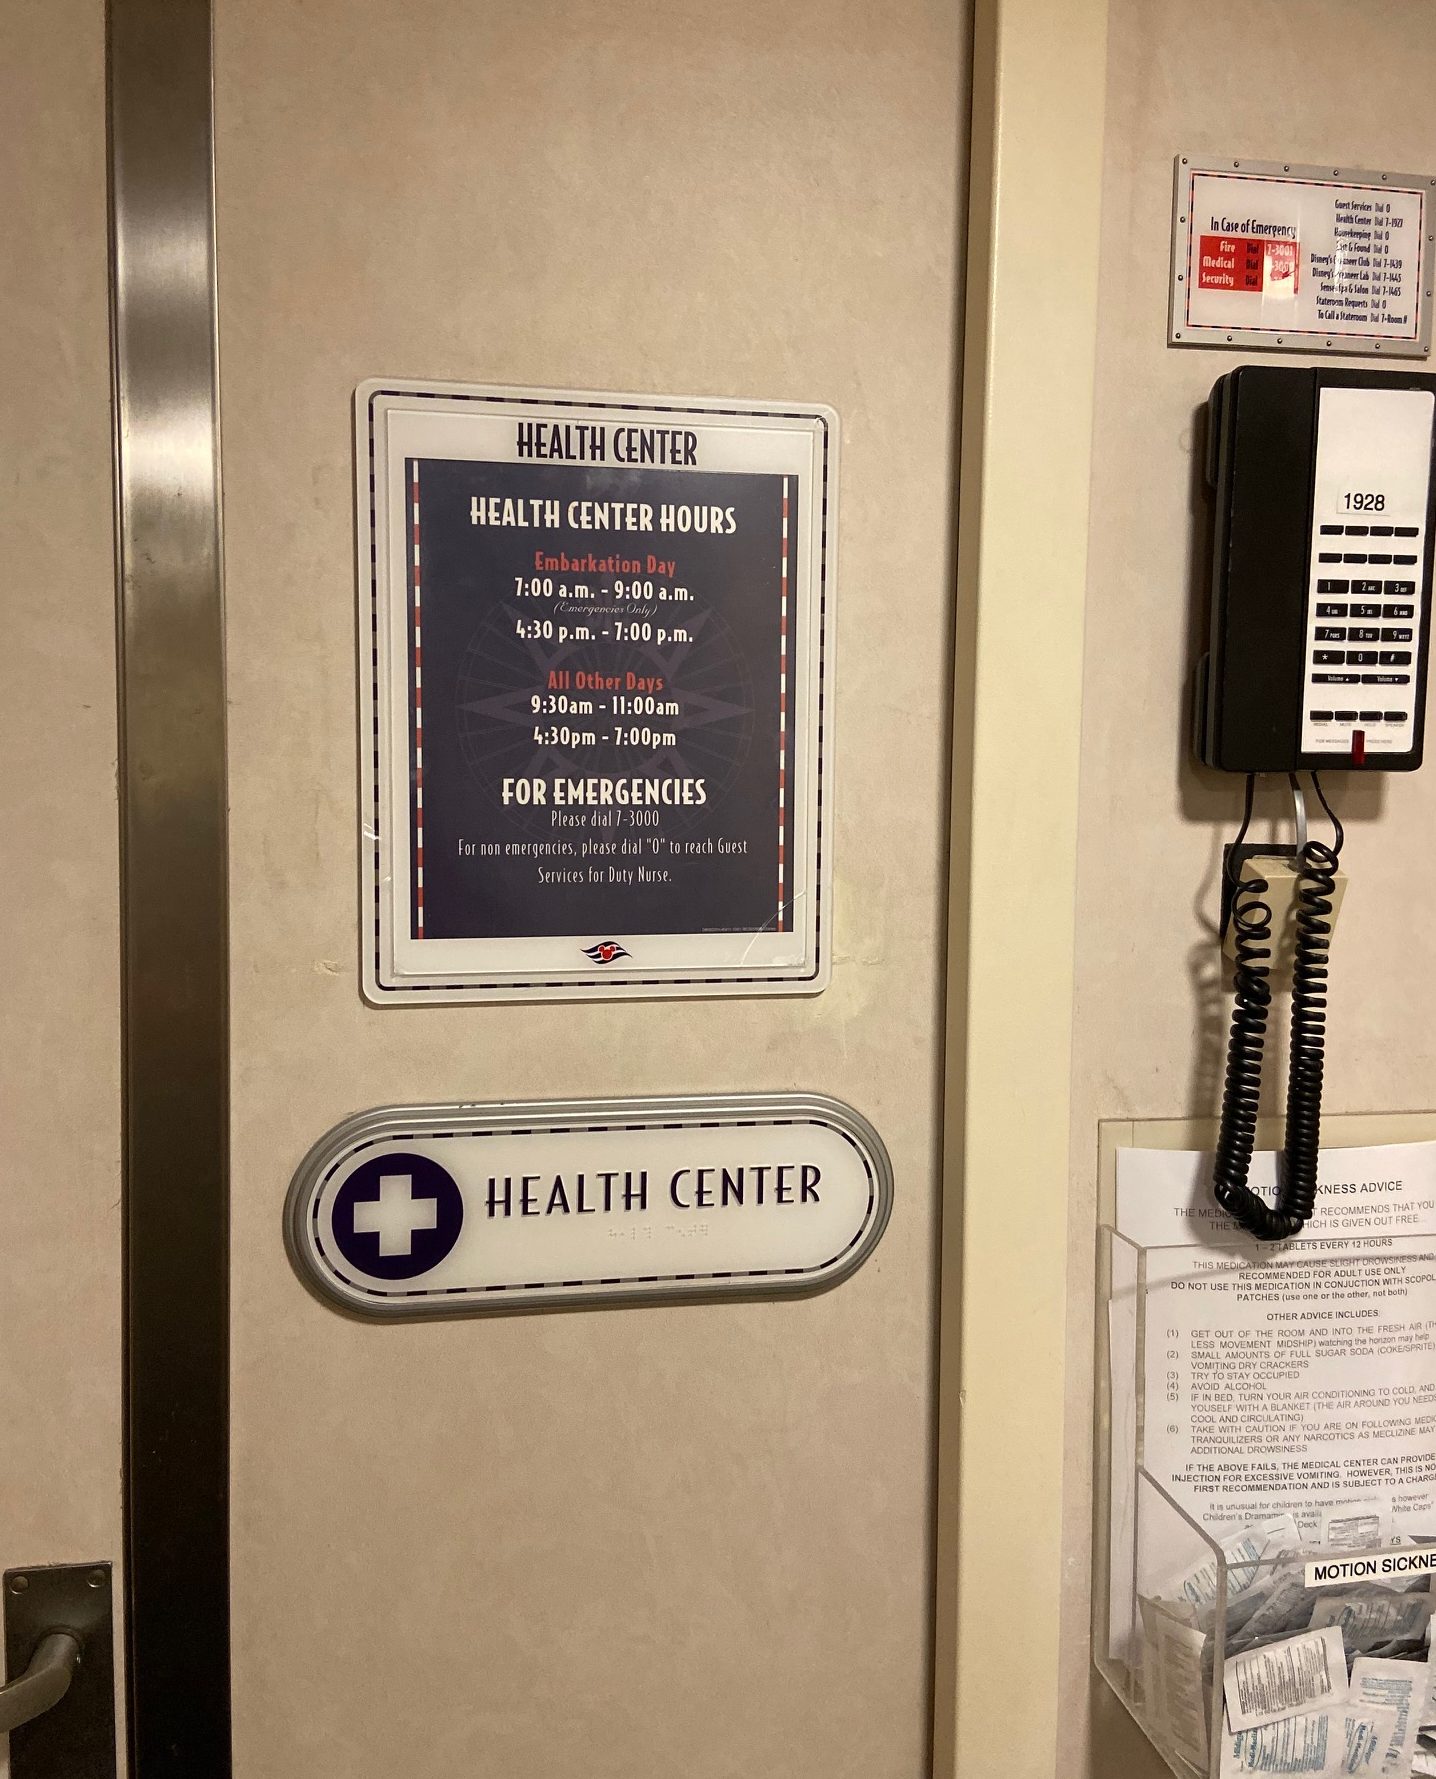 Health Center Disney Cruise Line